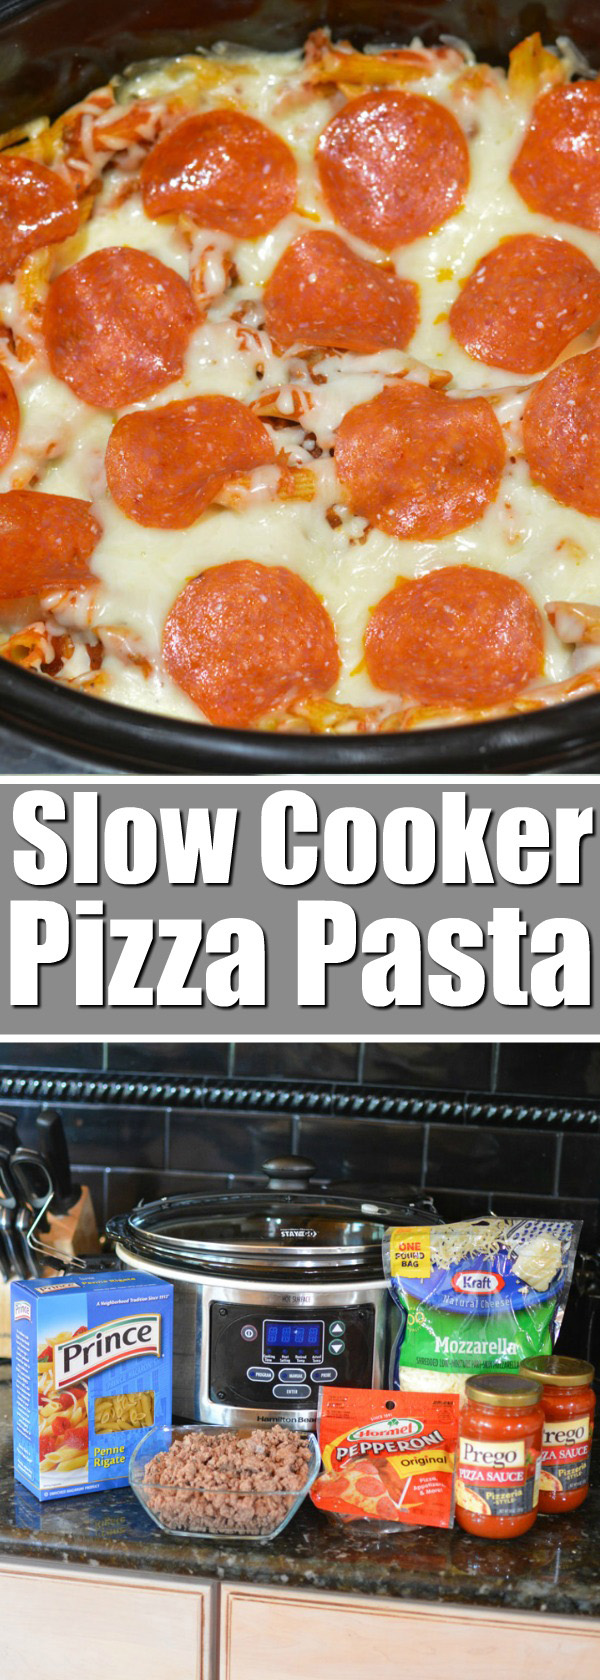 slow cooker pizza casserole